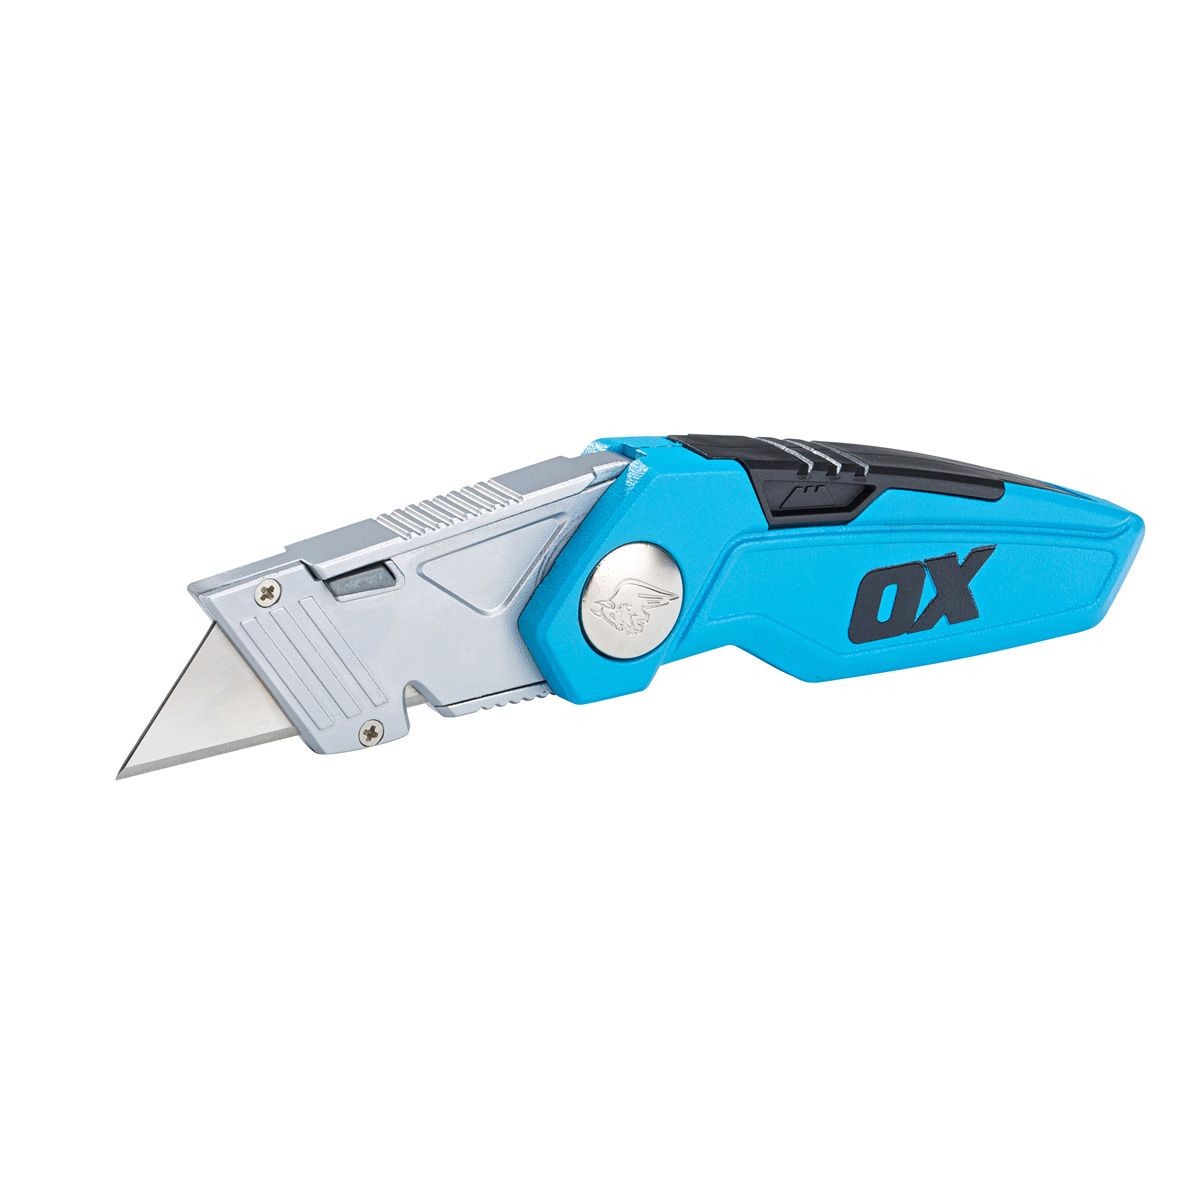 OX TOOLS - OX Pro Fixed Blade Folding Knife  HILOXP221301